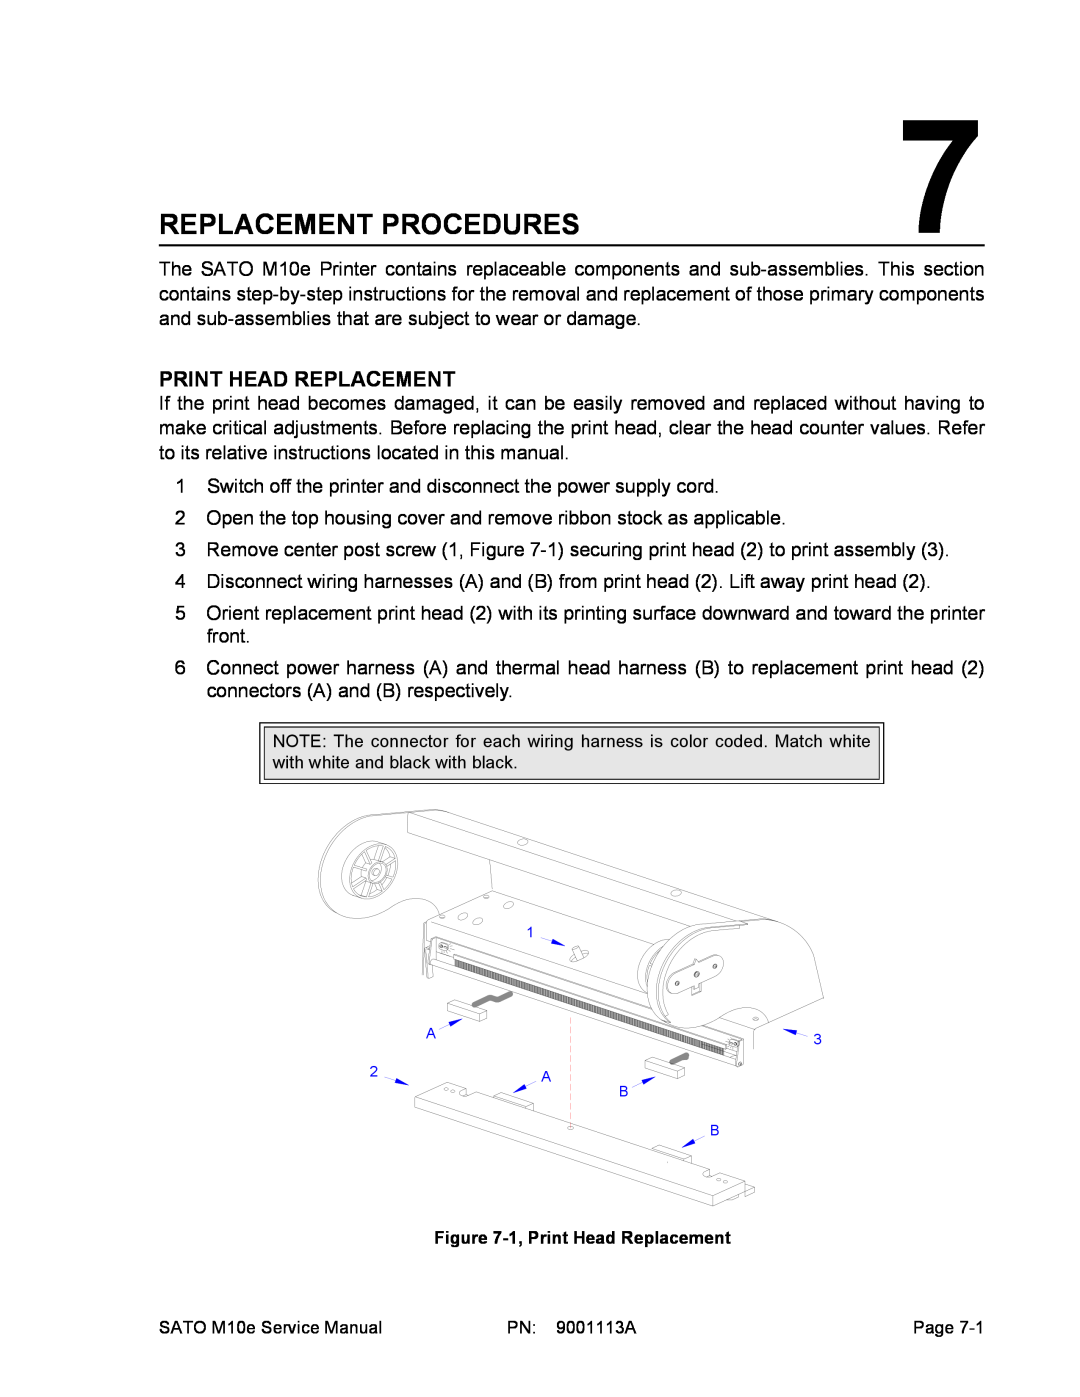 SATO 10e service manual Replacement Procedures, Print Head Replacement 